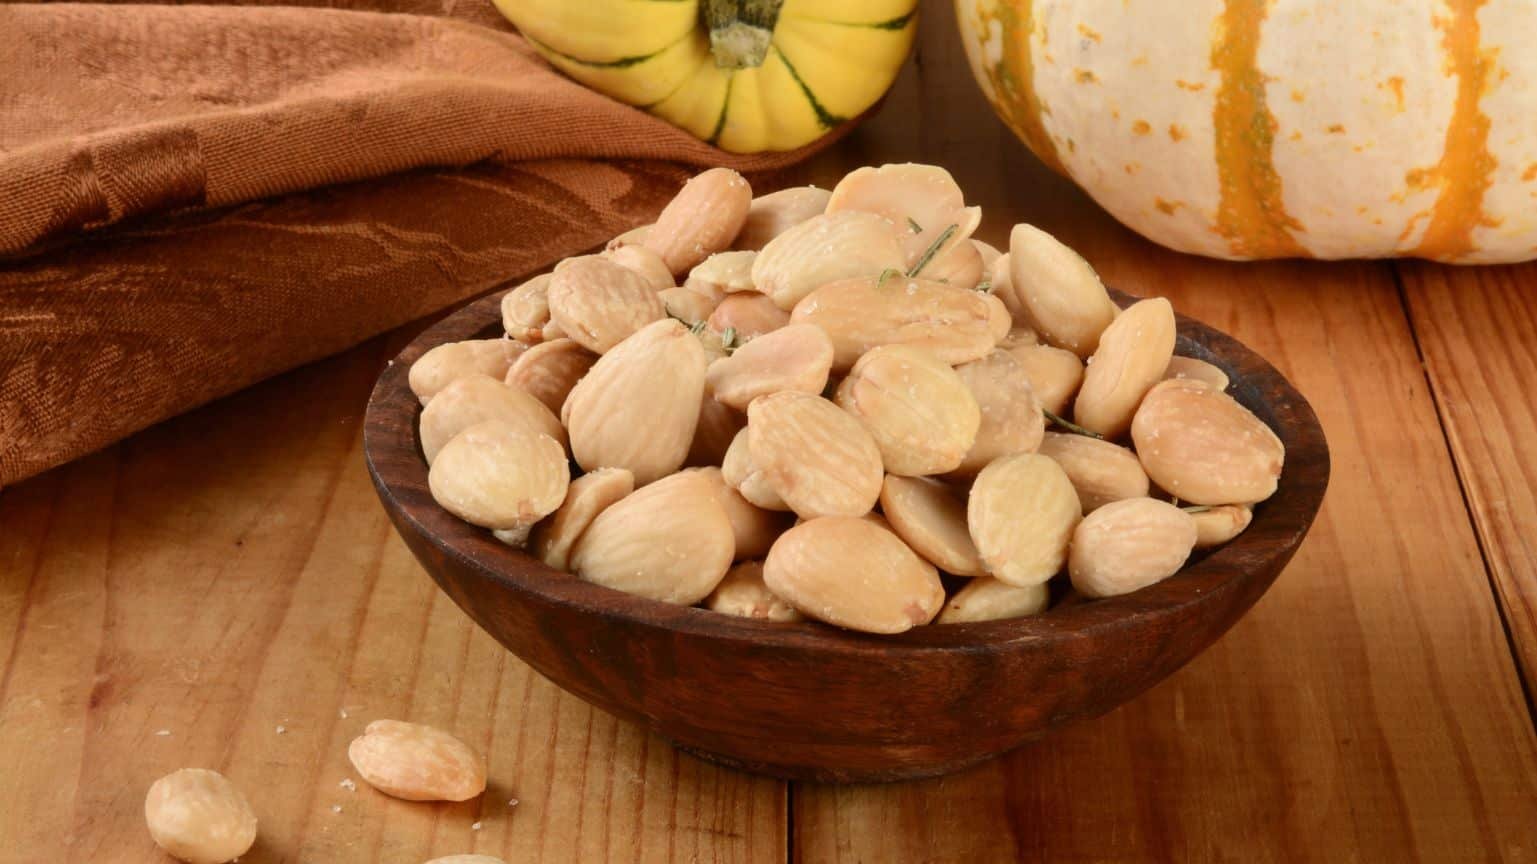 Almond nuts varieties